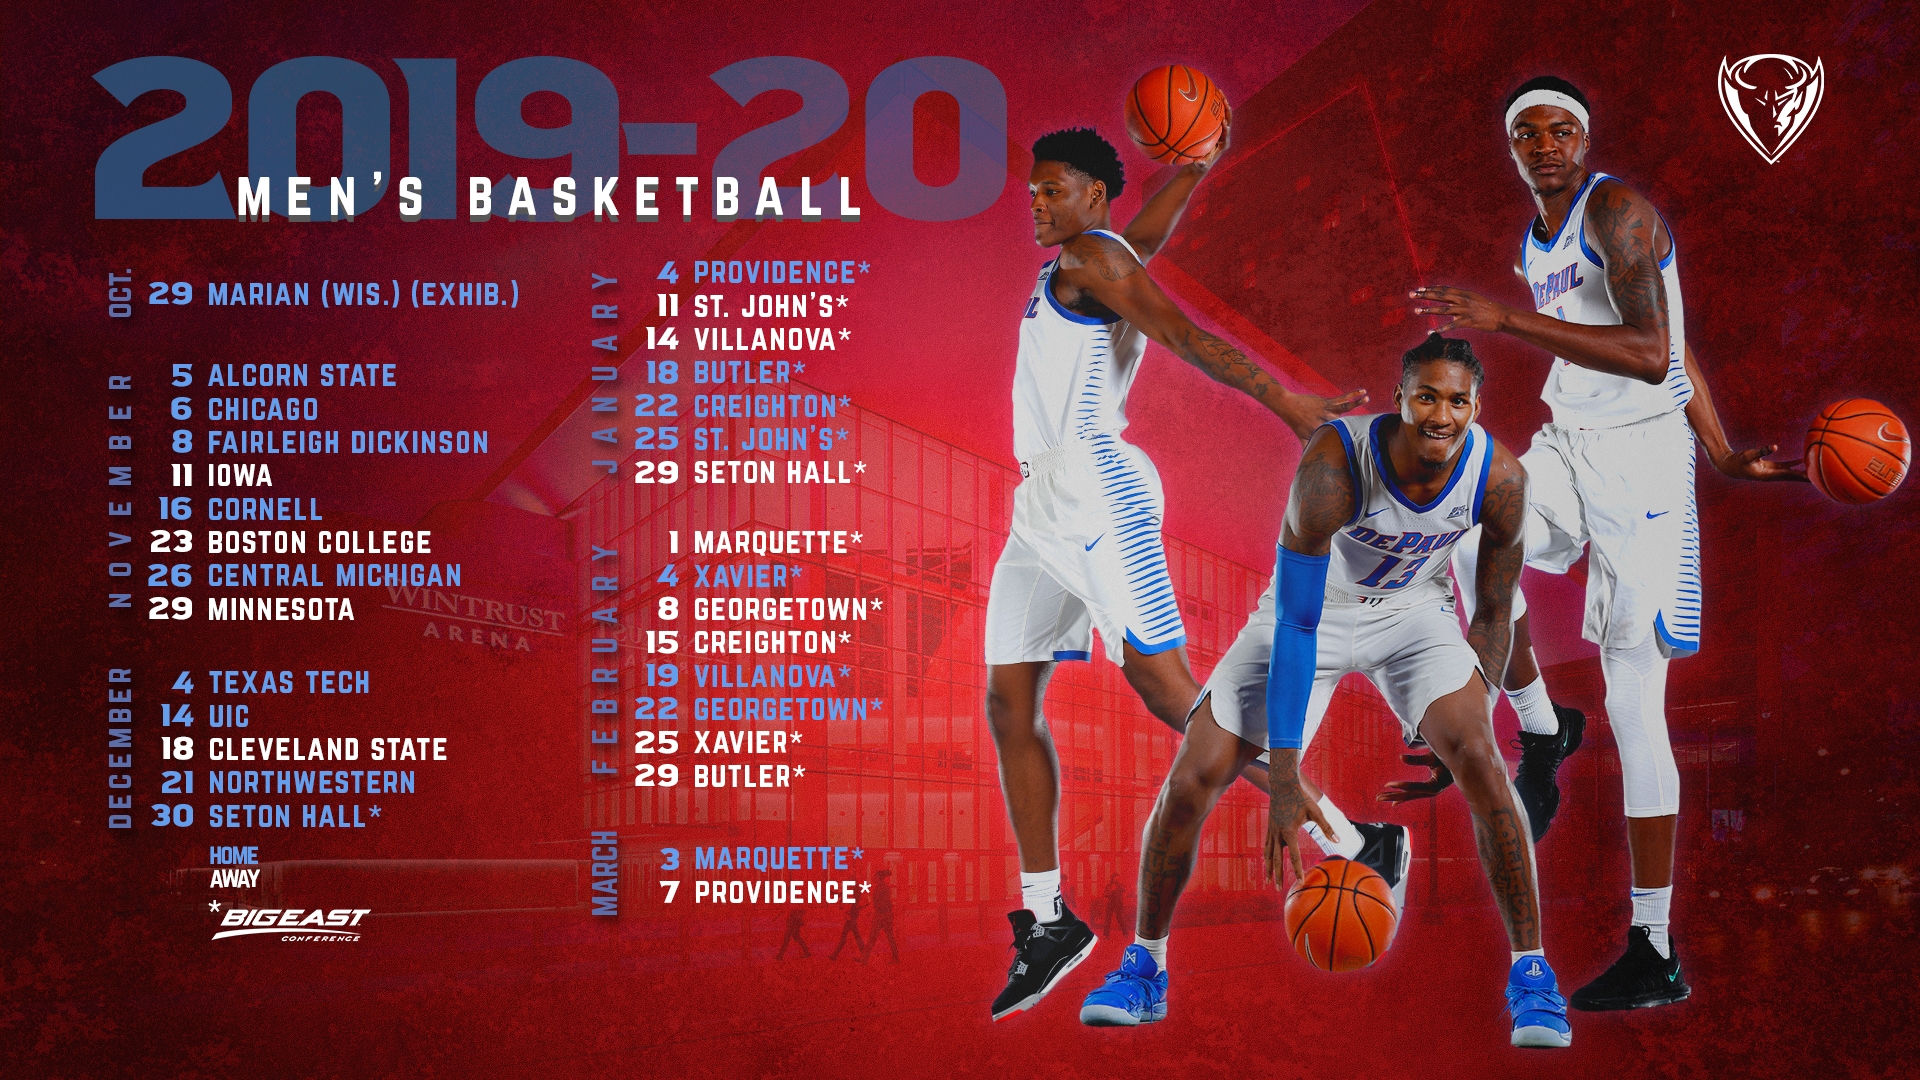 Save The Dates 2019 20 Men s Basketball Schedule Announced DePaul University Athletics